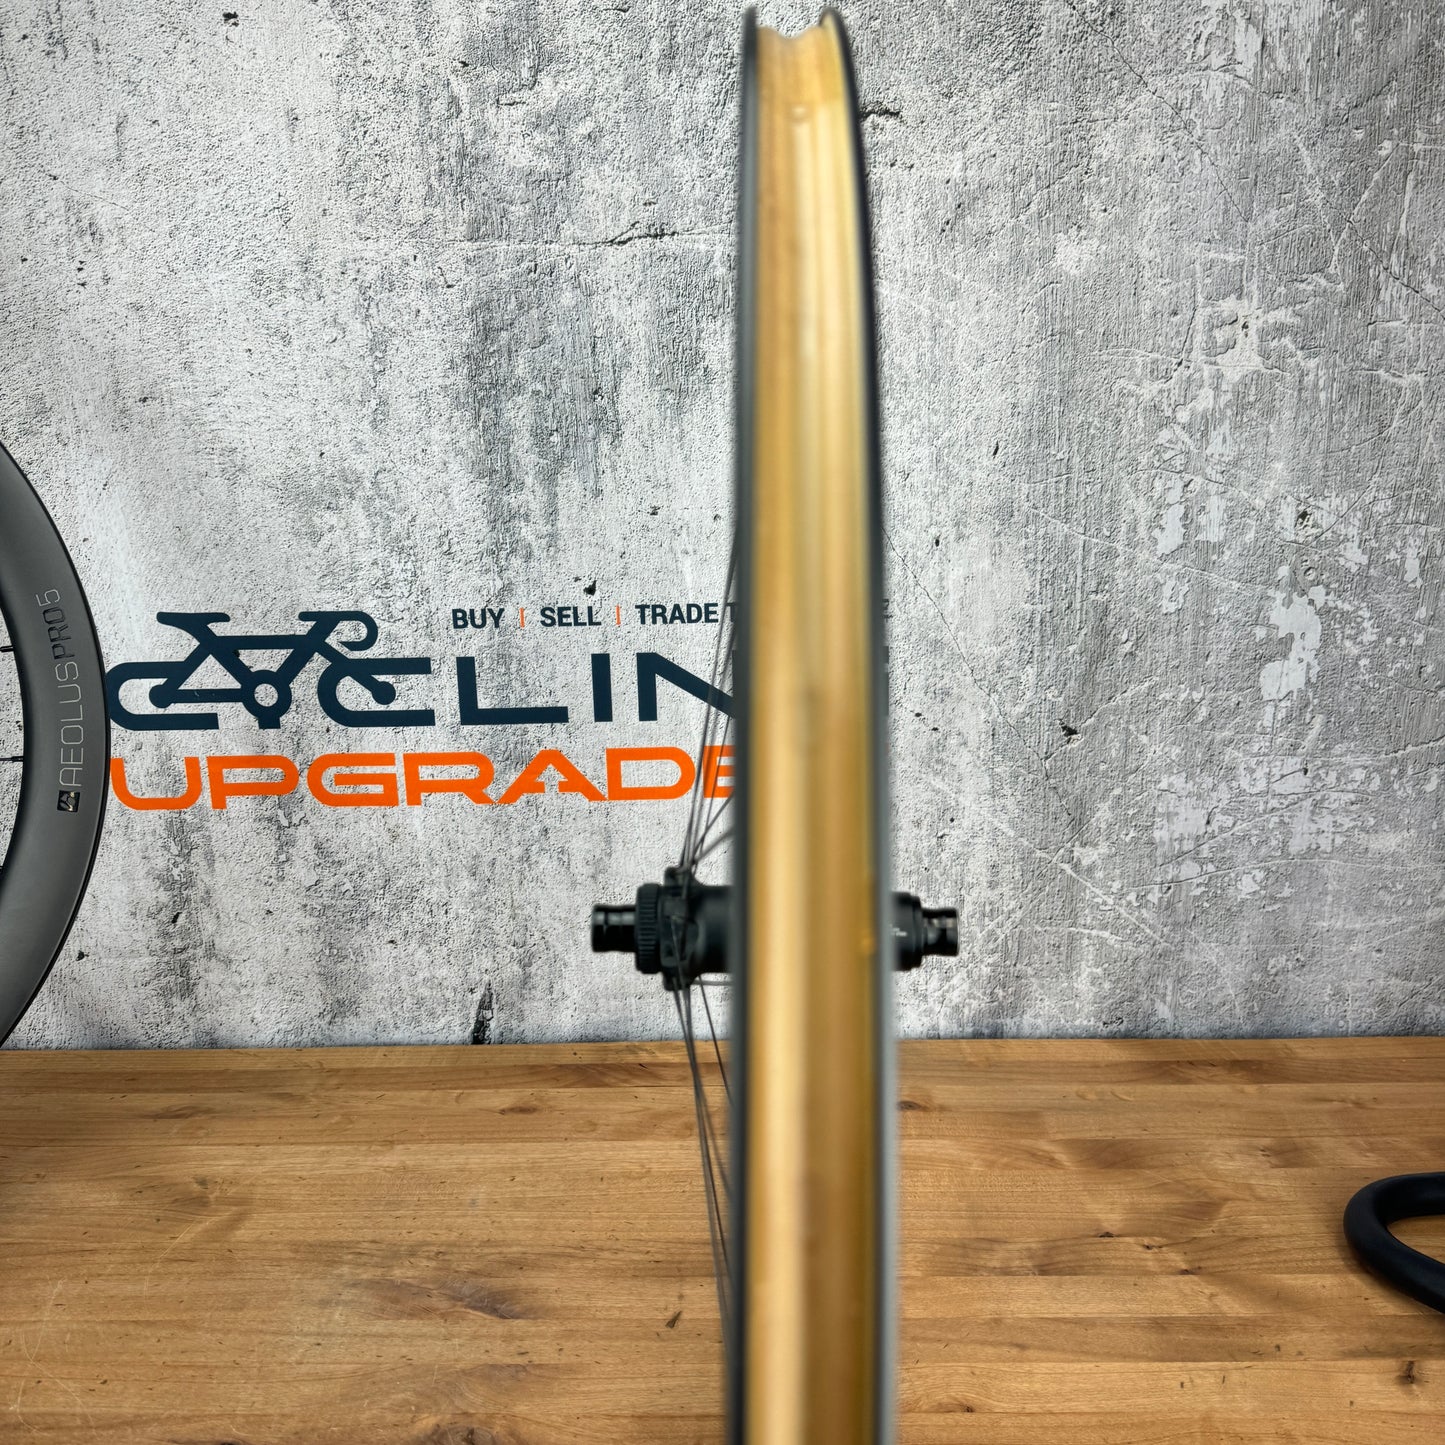 Bontrager Aeolus Pro 5 50mm Carbon Tubeless Disc Brake Bike Wheelset 700c 1795g